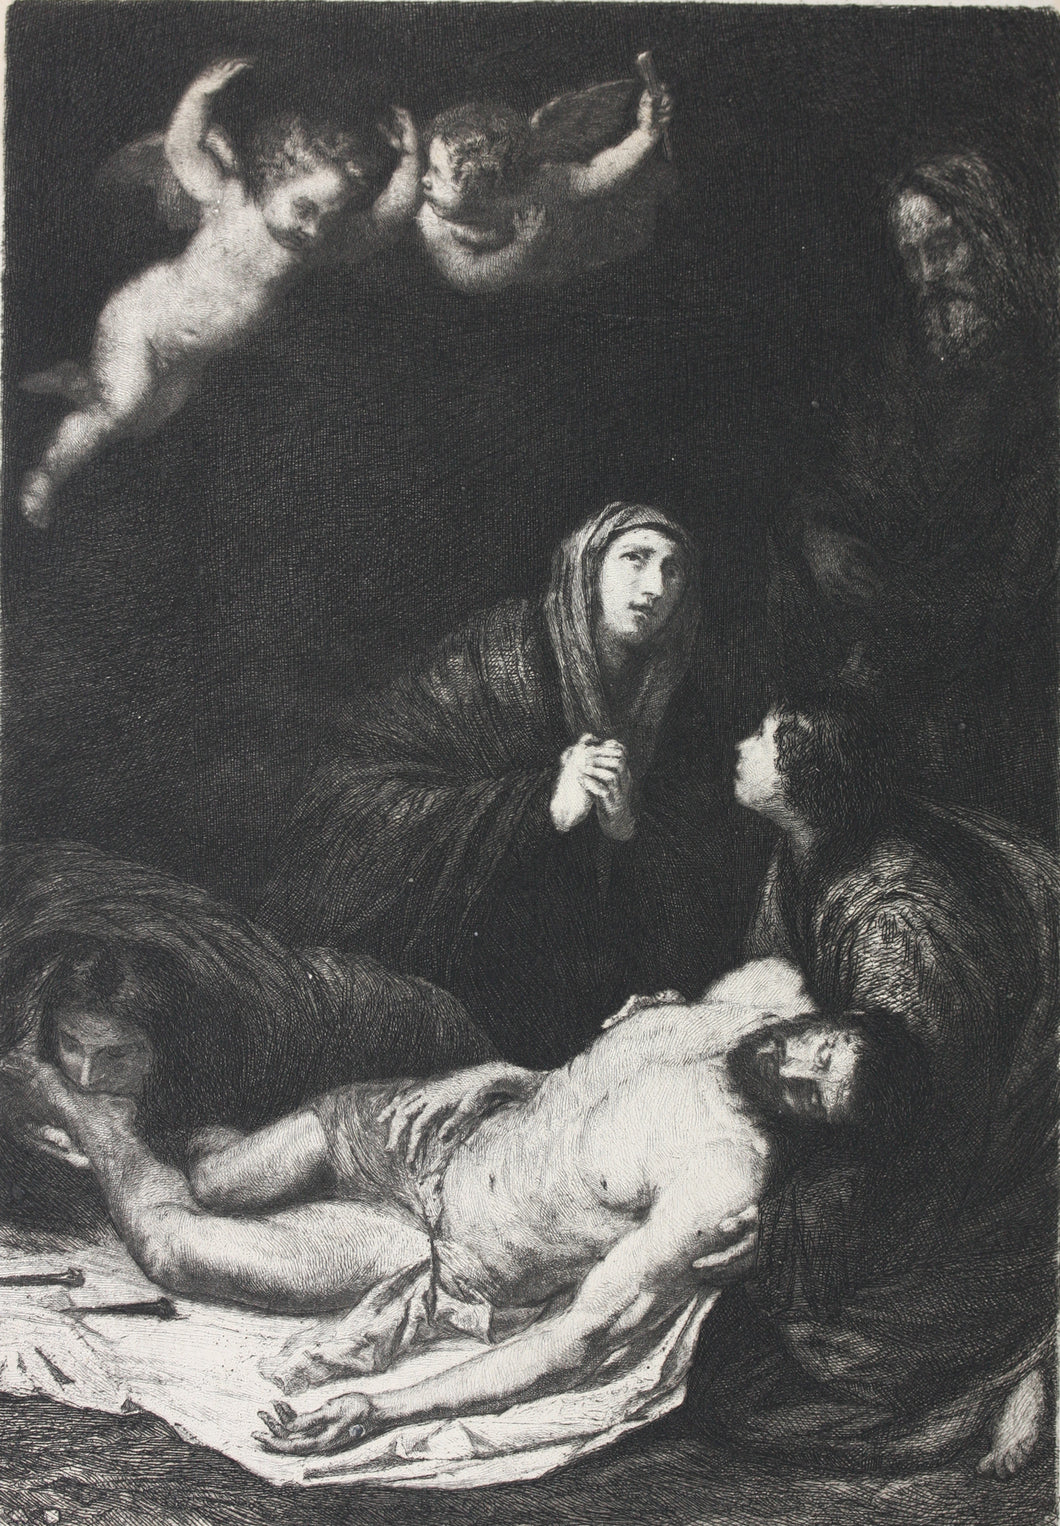 Jusepe de Ribera, after. The Descent from the Cross. Mezzotint by Wilhelm Krauskopf. 1884.